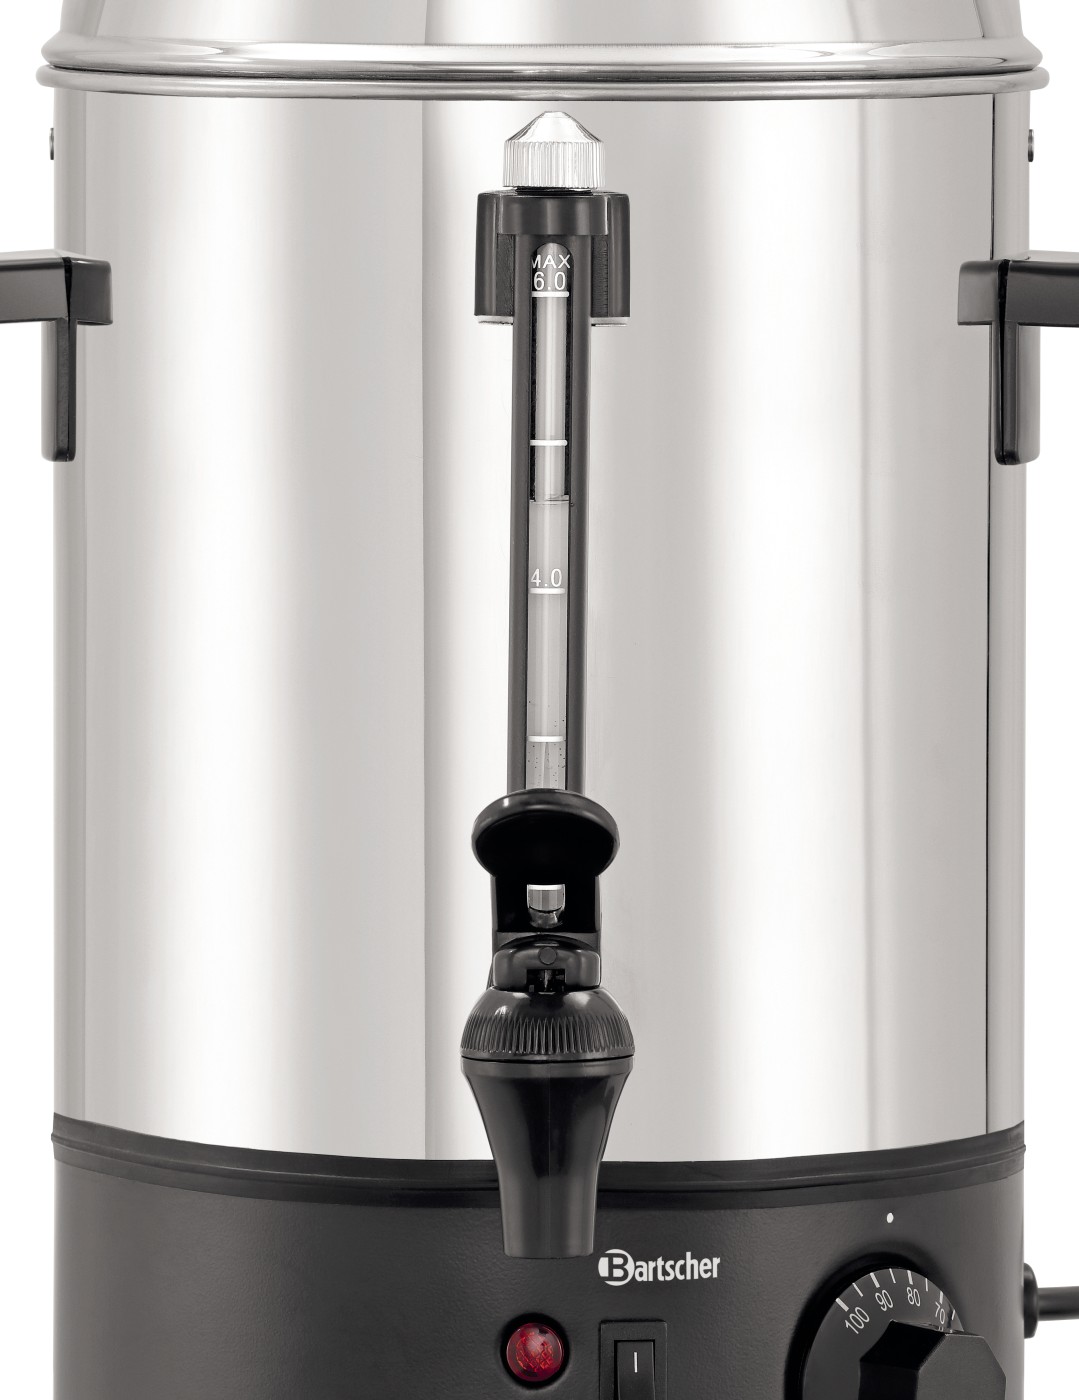  Bartscher Hot water dispenser 6L 